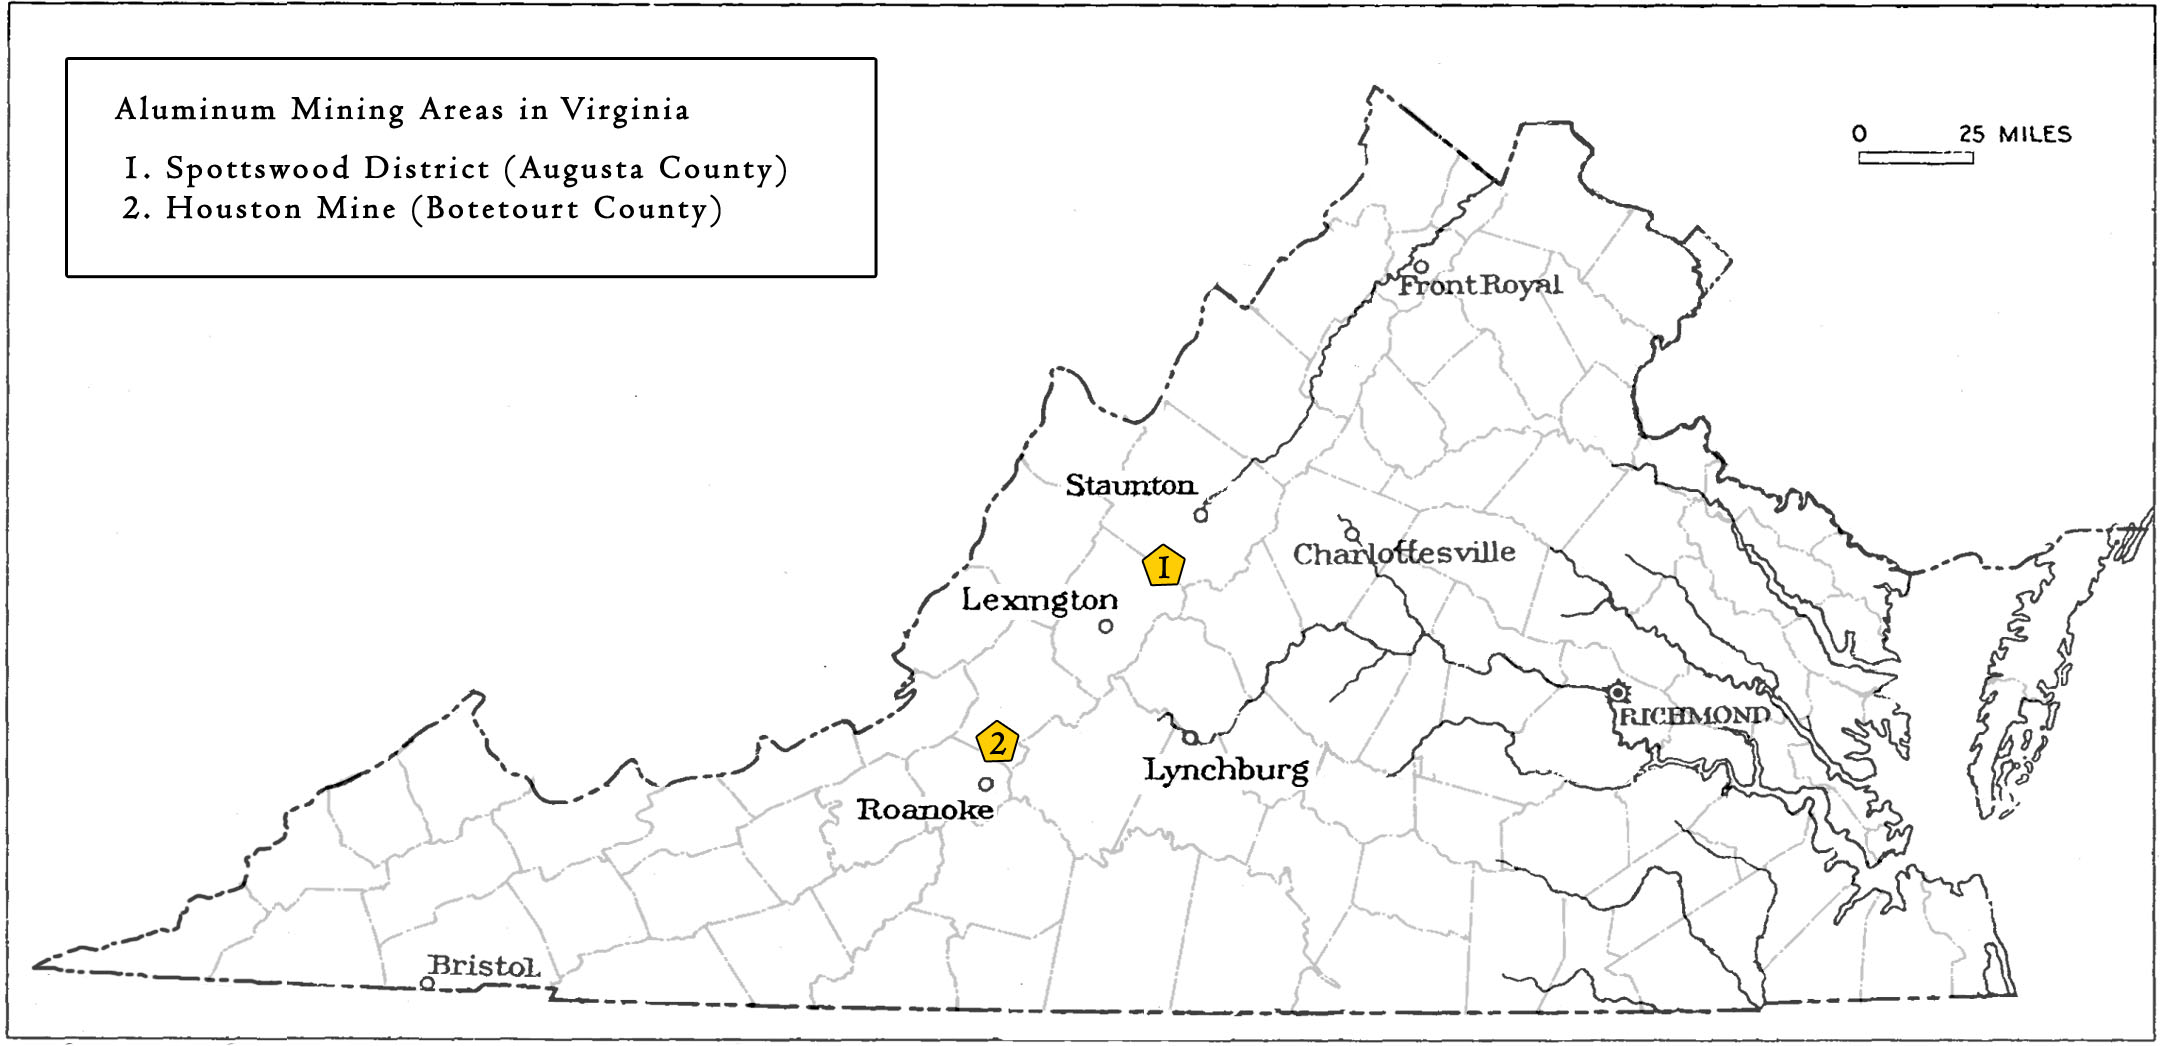 Aluminum mines and prospects in Virginia